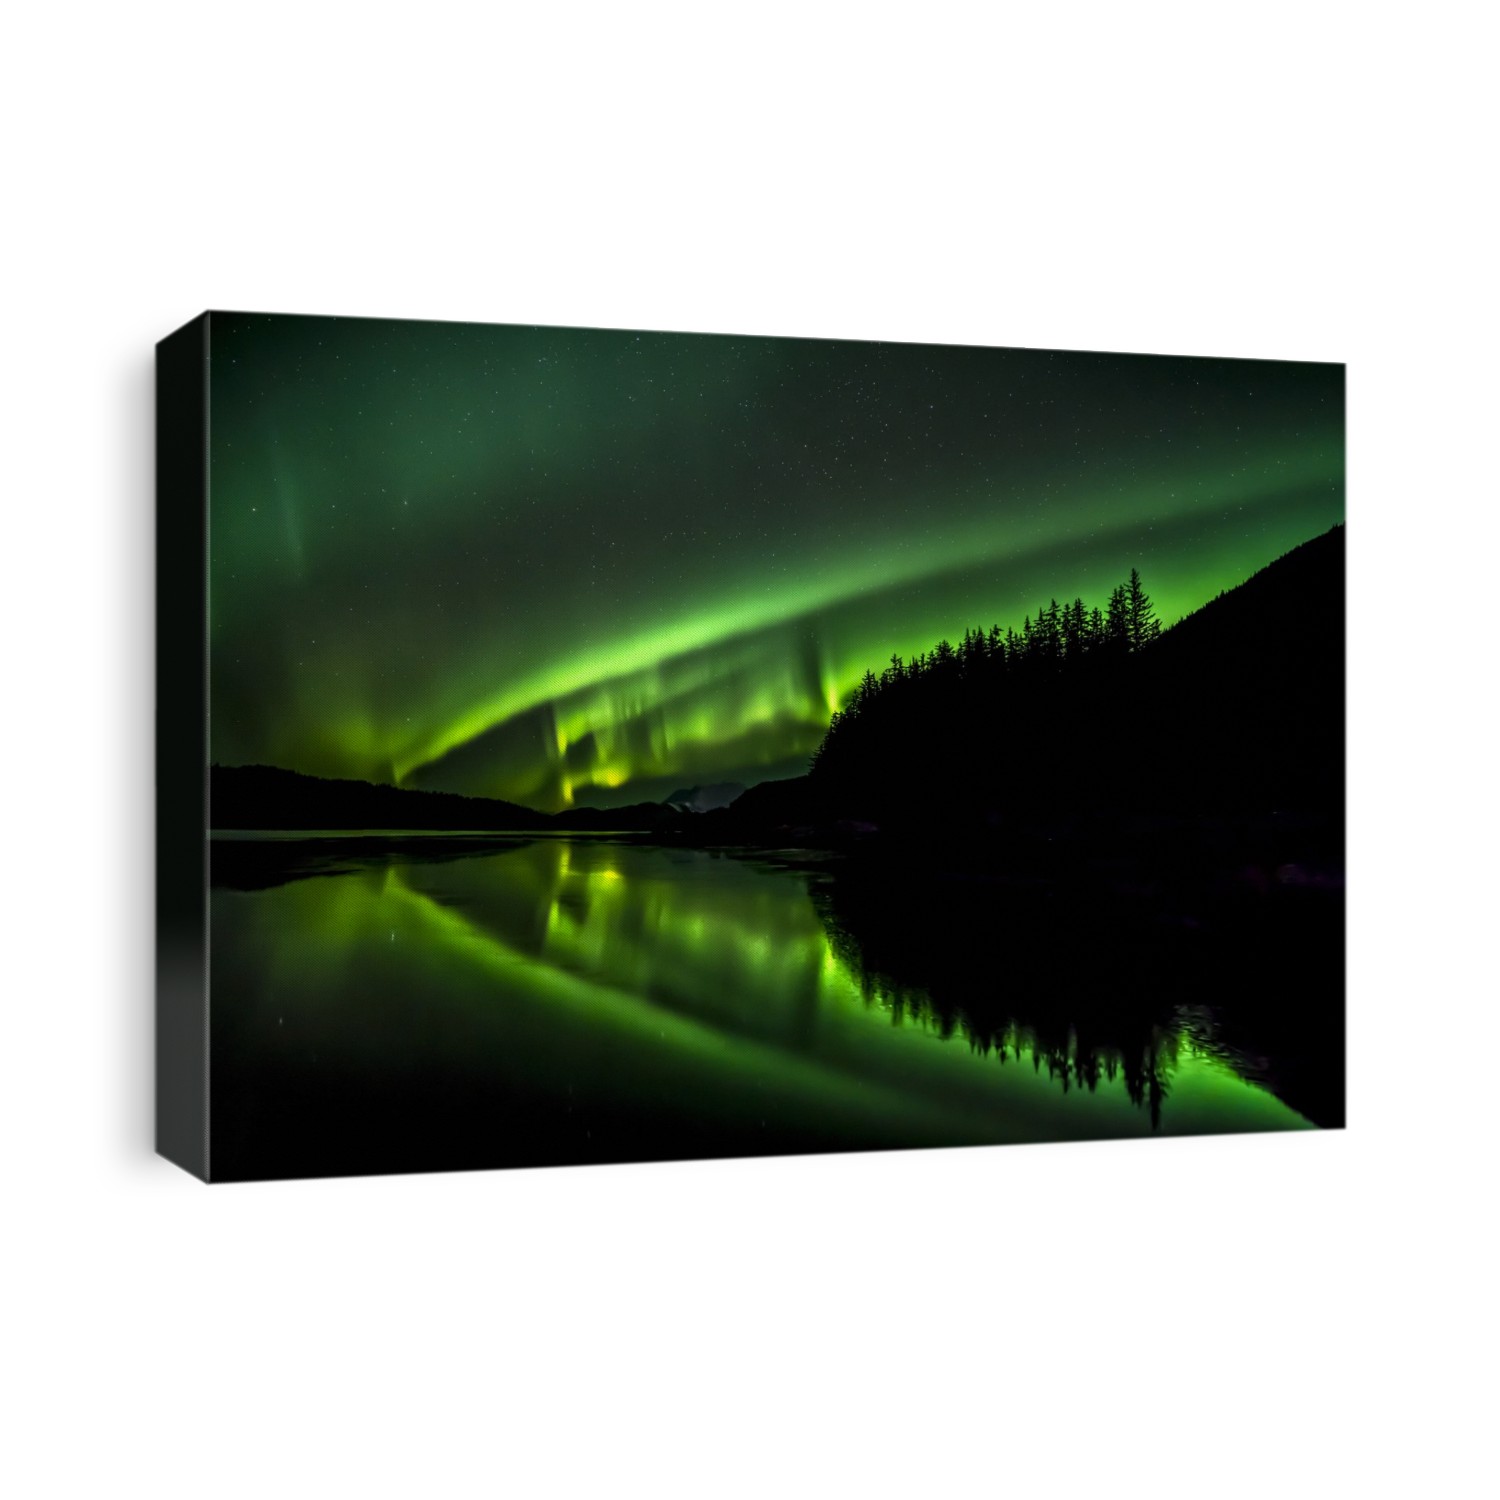 Green Northern lights, Tongass National Forest, near Juneau, Southeast Alaska; Alaska, United States of America